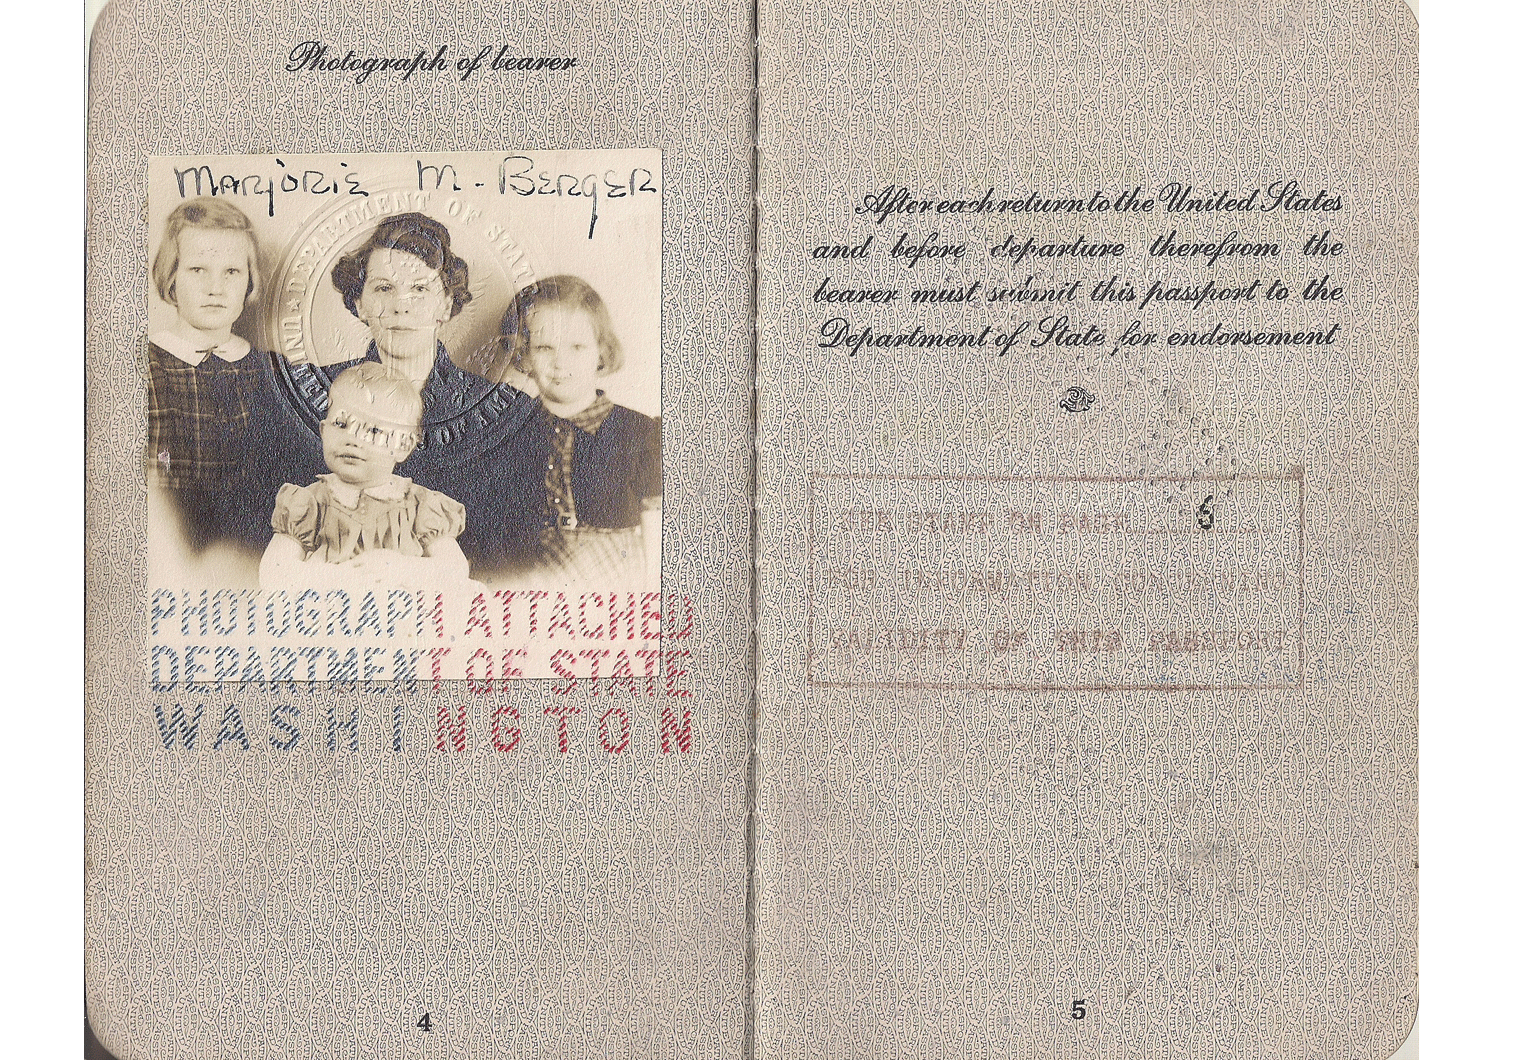 1940 Jewish passport